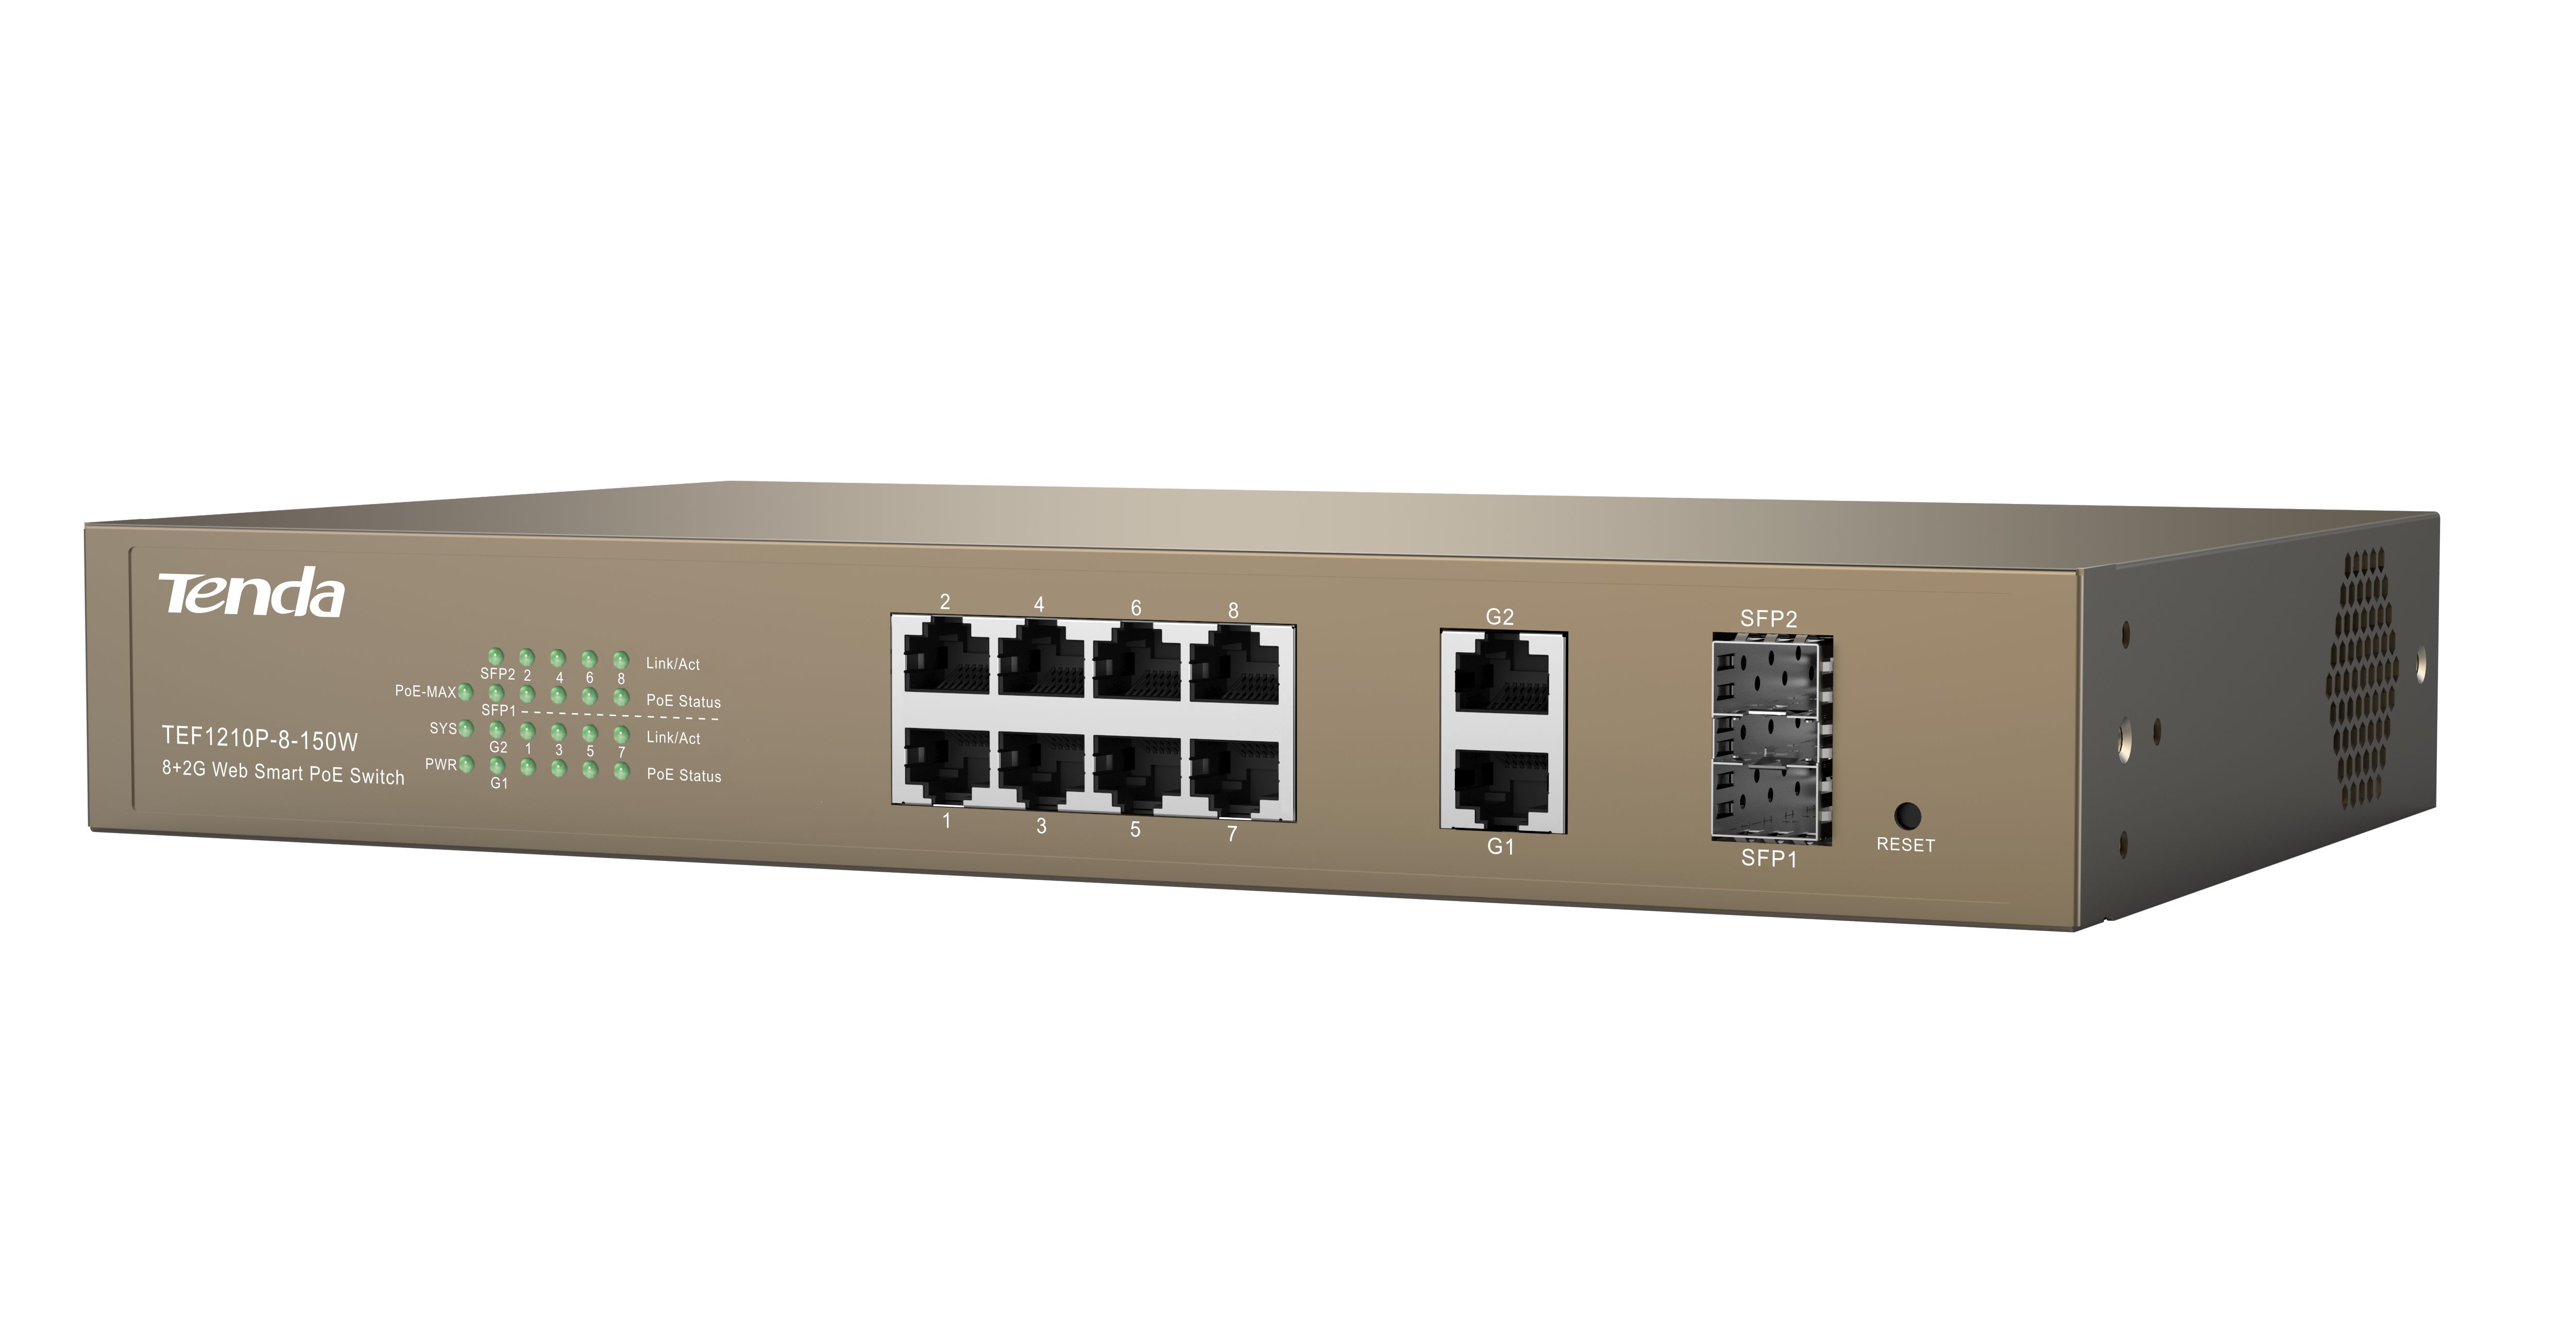 Tenda 8-Port 10/100Mbps + 2 Gigabit Web Smart PoE Switch, TEF1210P-8- 150W; Standard and Protocol: IEEE 802.3, IEEE 802.3u, IEEE 802.3z, IEEE 802.3ab, IEEE 802.3x, IEEE 802.1D, IEEE 802.1W, IEEE 802.1Q, IEEE 802.3af, IEEE 802.3at; Fixed Ports: 8x 10/100Base-TX ports, 2x 10/100/1000Base-T ports, 2x_3